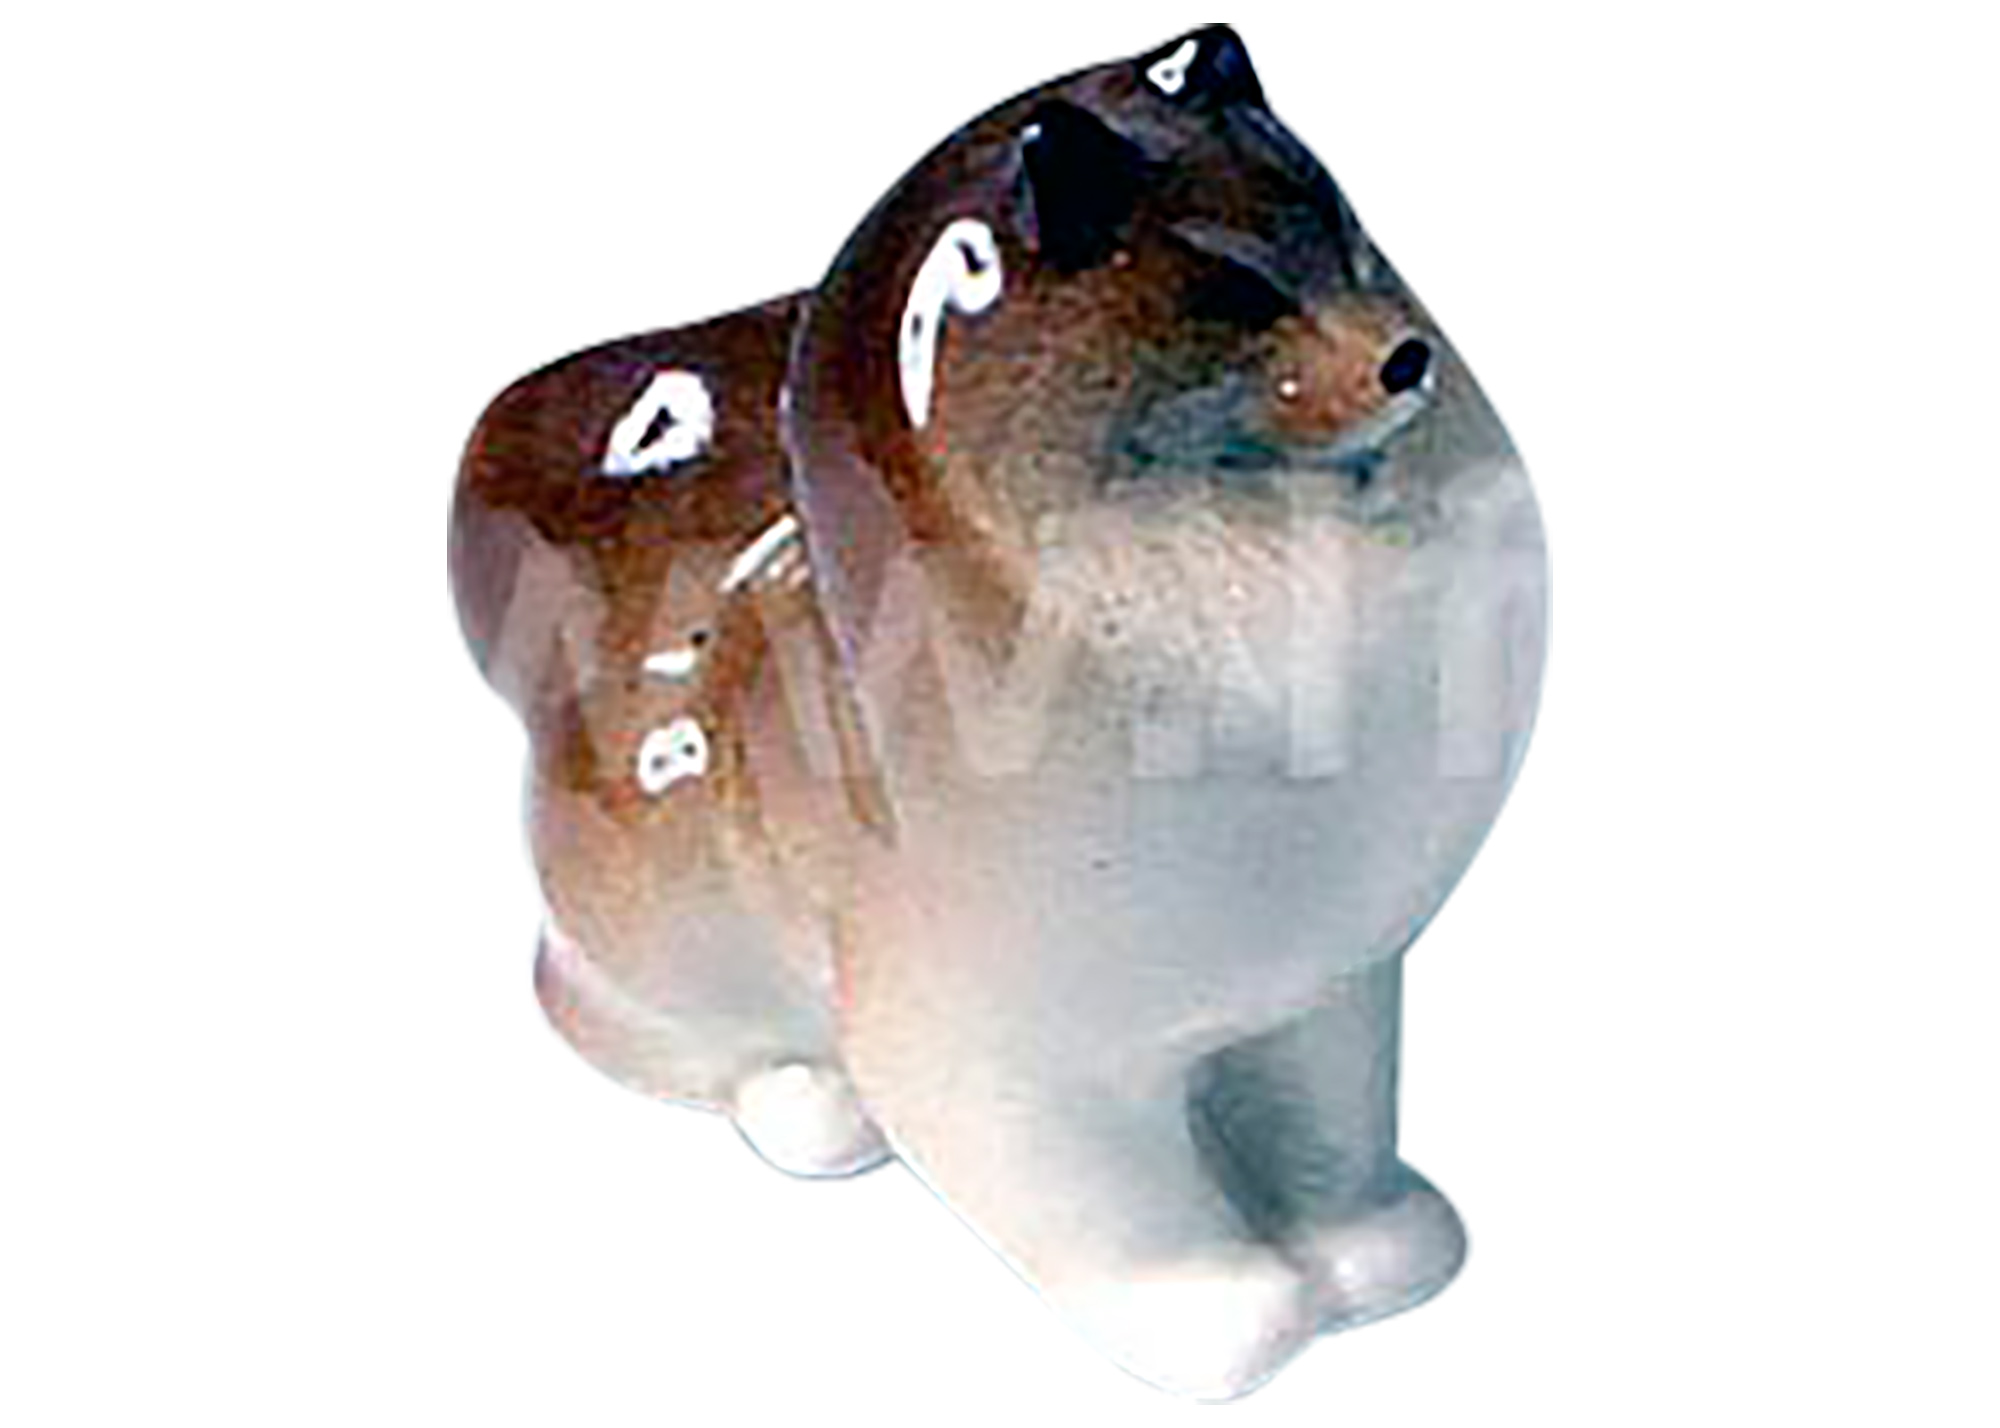 Buy Tan Pomeranian Dog Figurine at GoldenCockerel.com